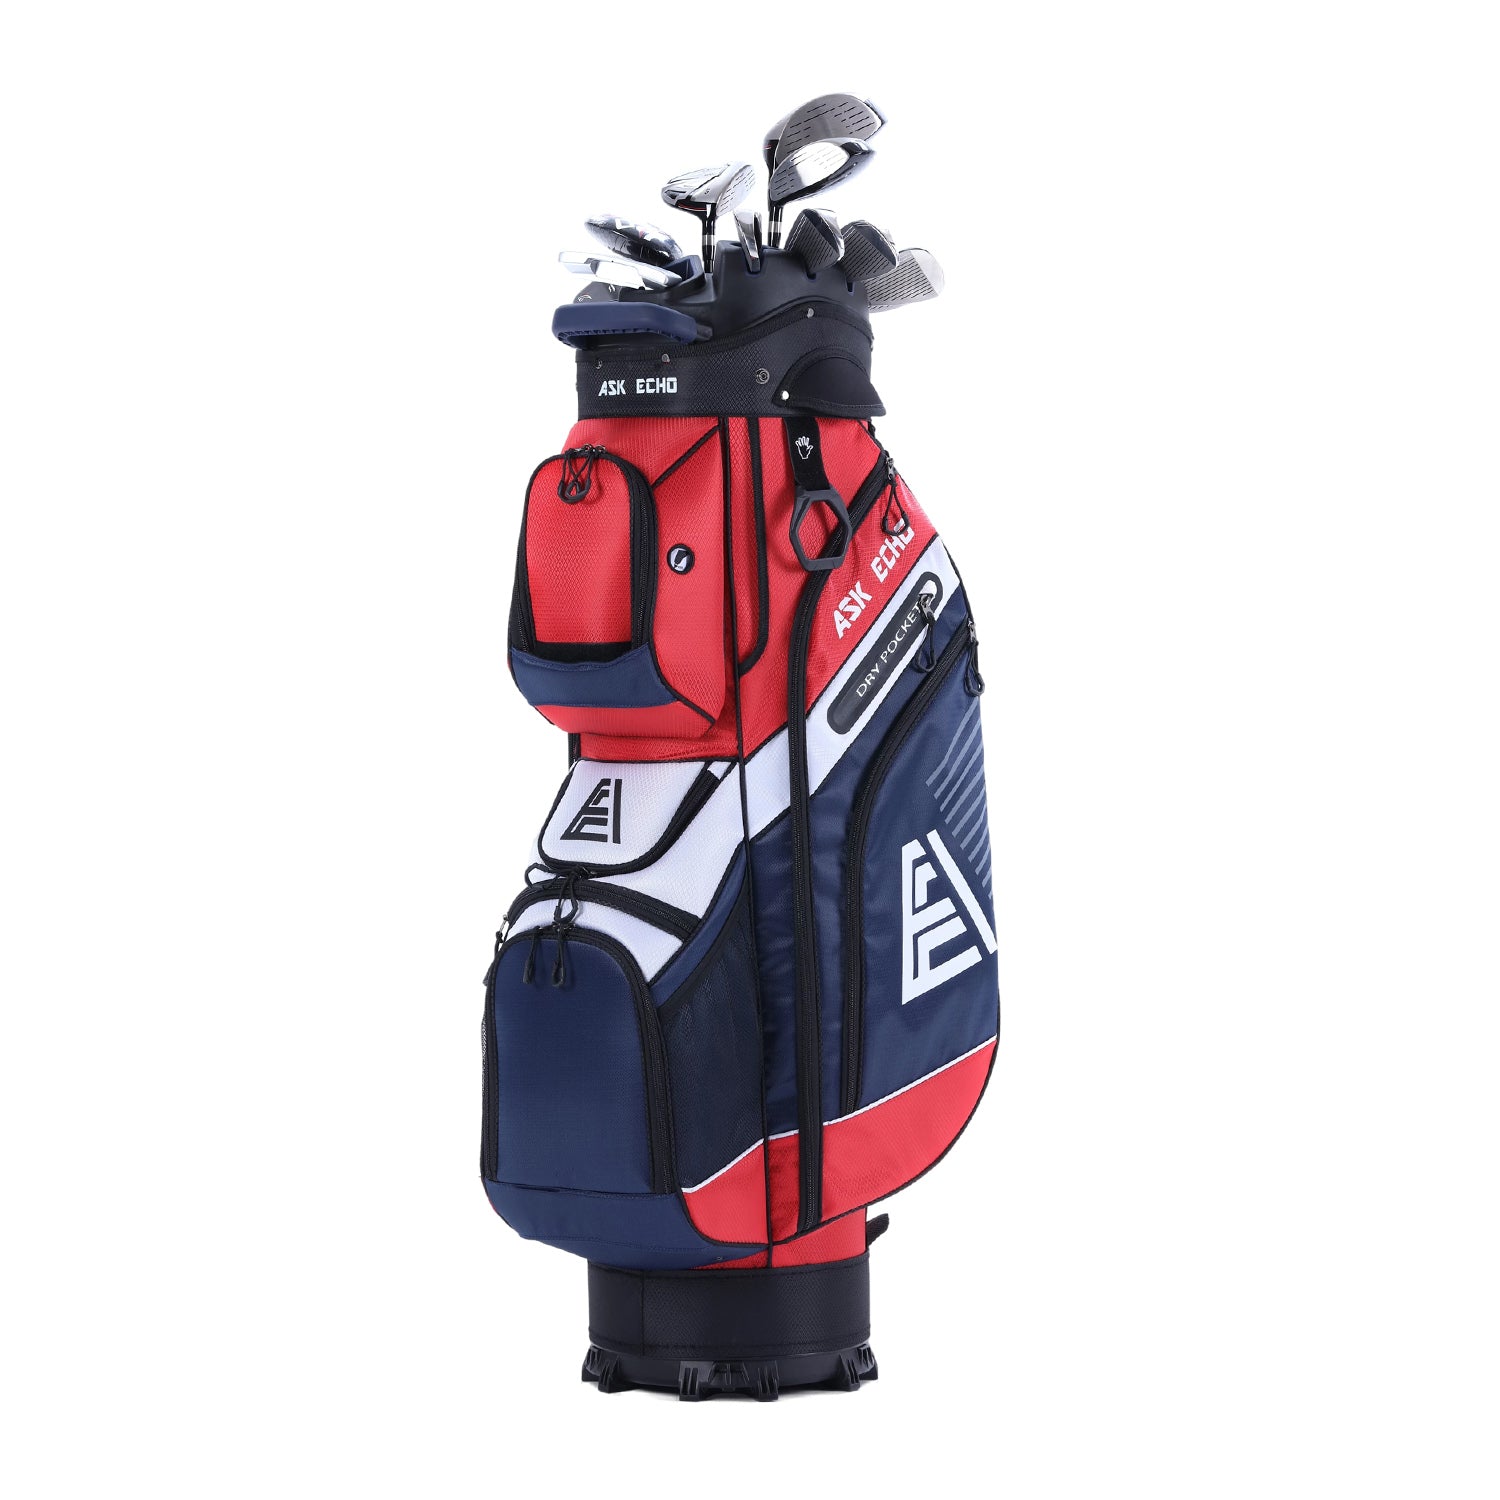 Ask Echo Premium Golf Cart Bag with 14 Way Full Length Dividers Plus Putter Tube